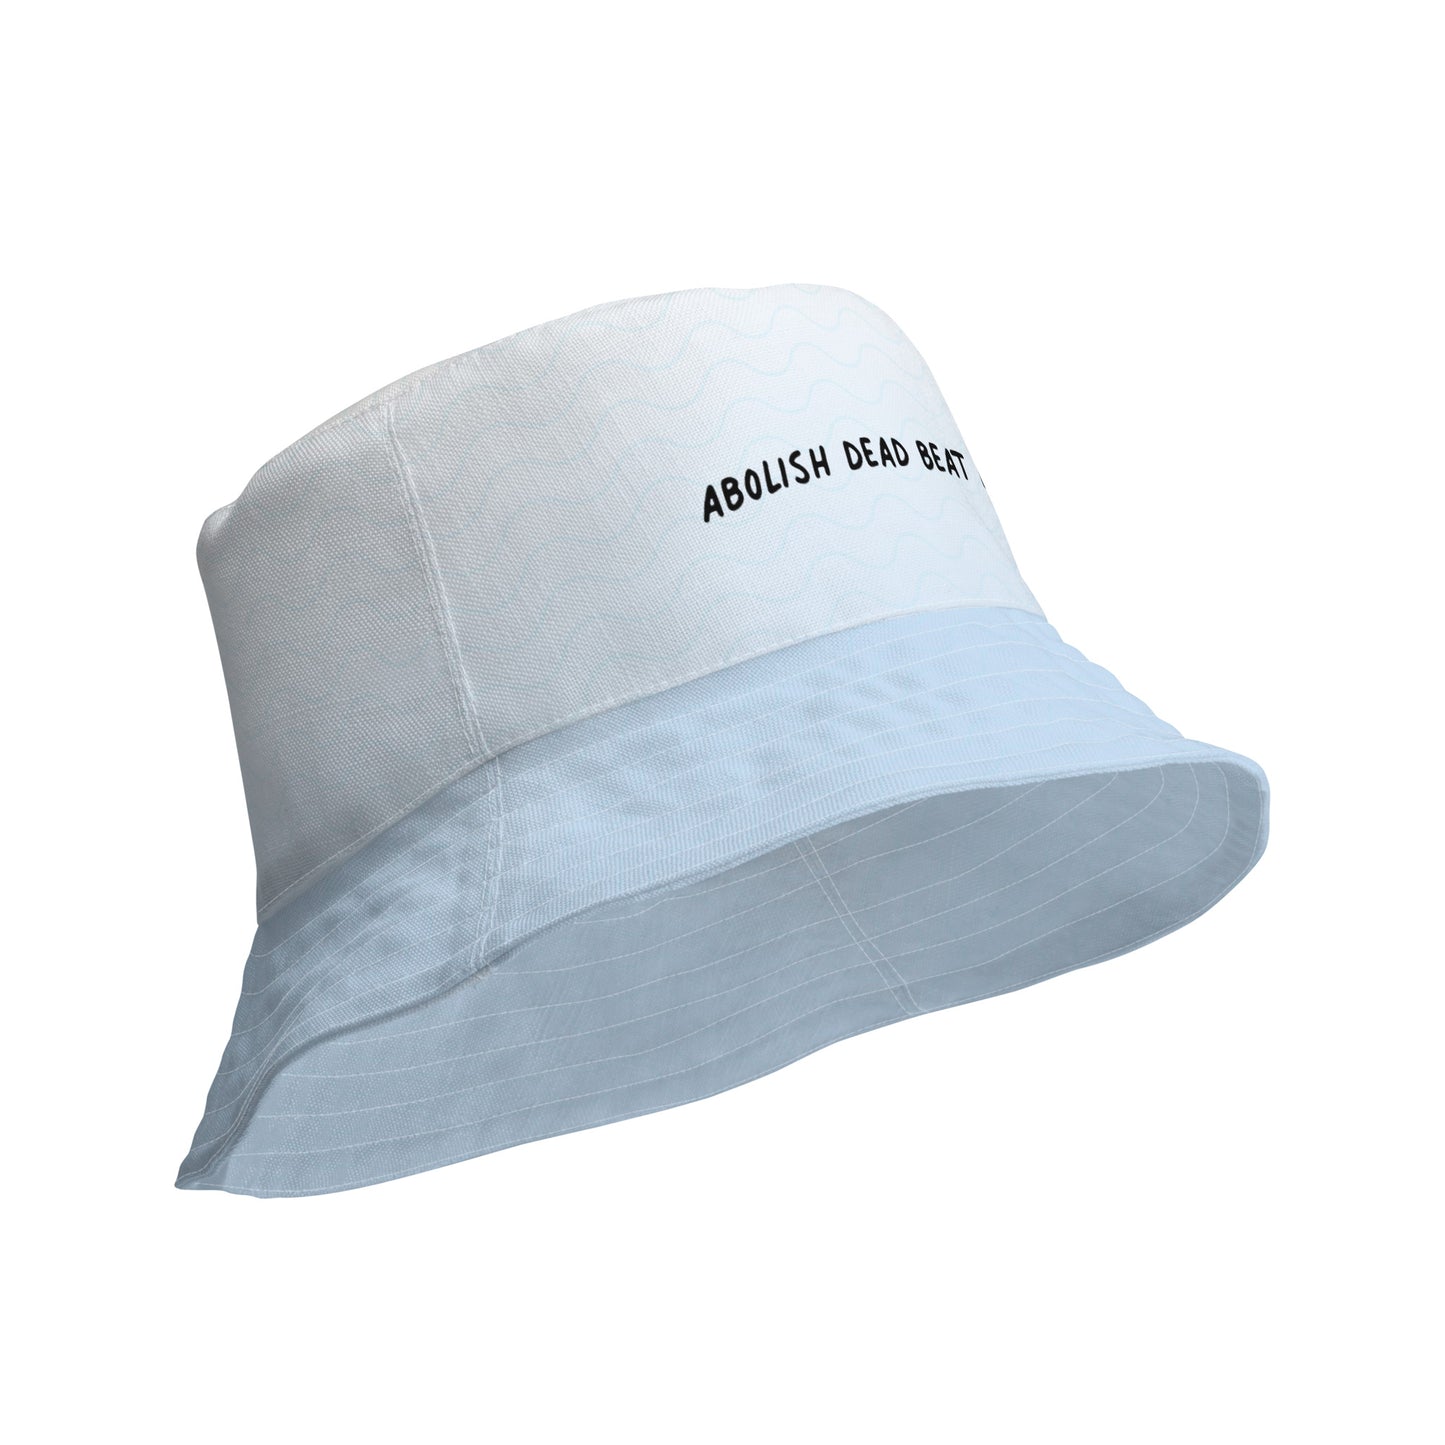 Abolish Dead Beat Dad's Reversible Blue Ombre Bucket Hat